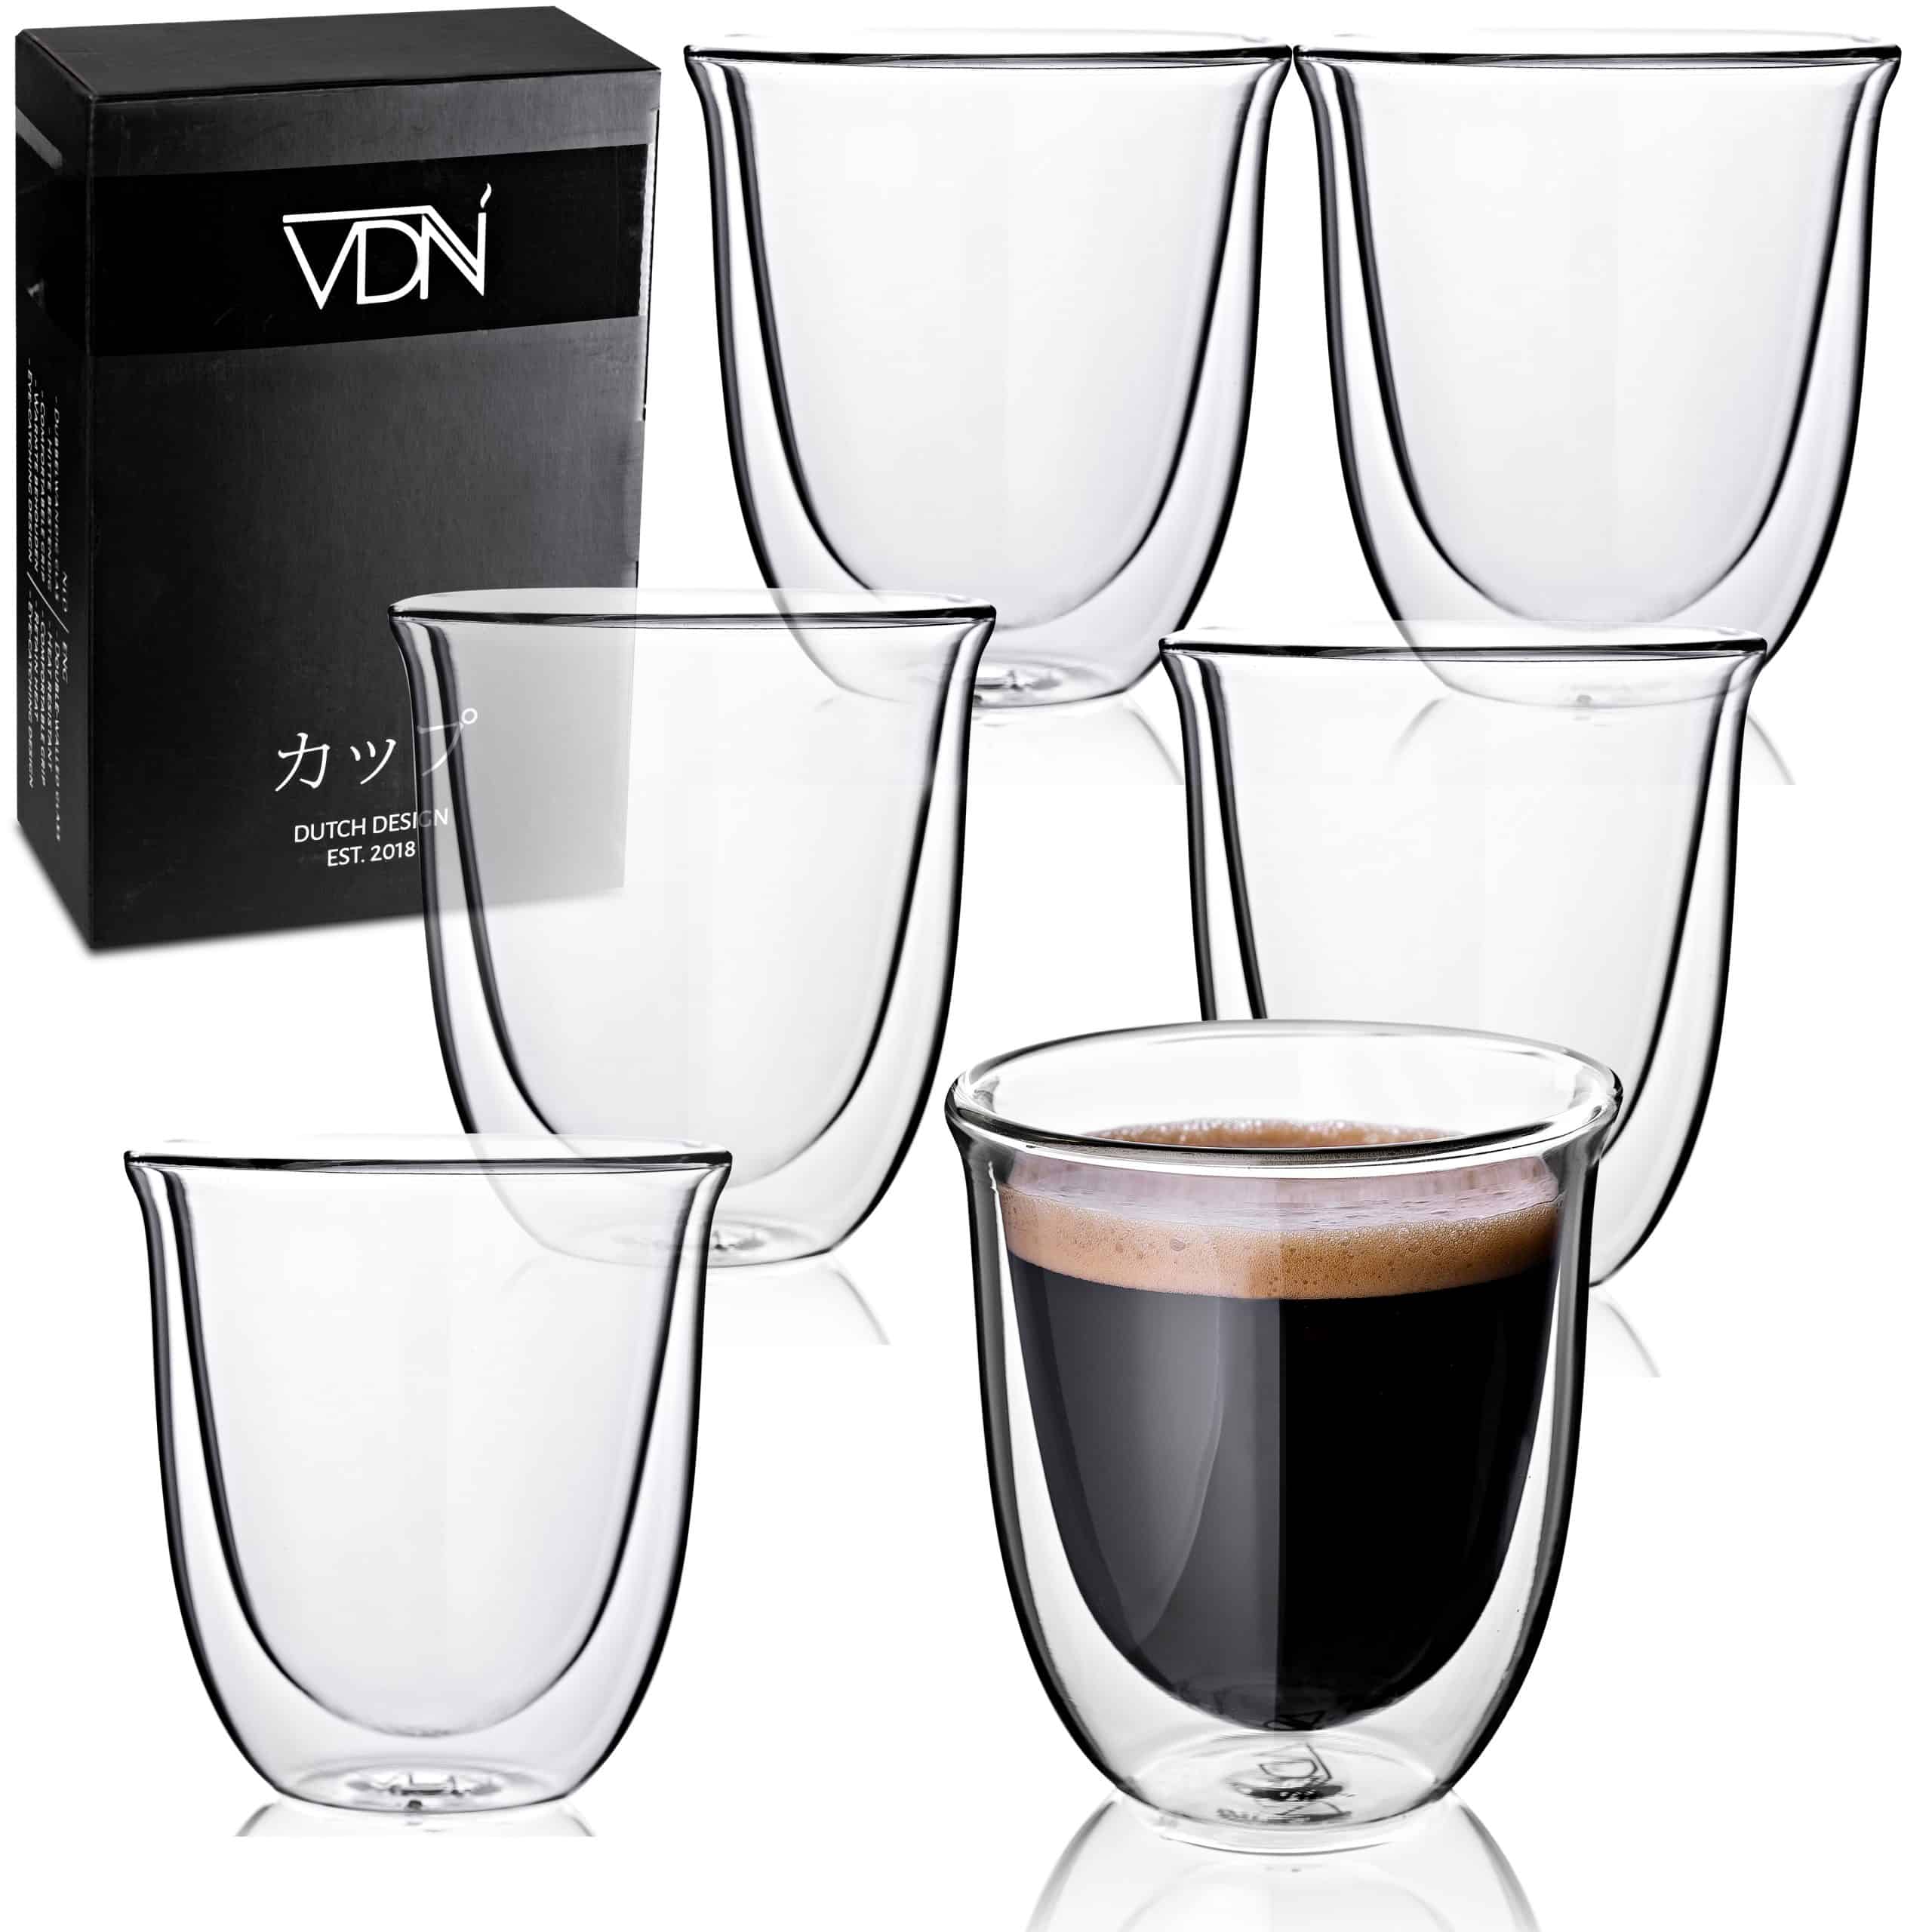 Dubbelwandige glazen koffie - 250 ML - Set van - VDN